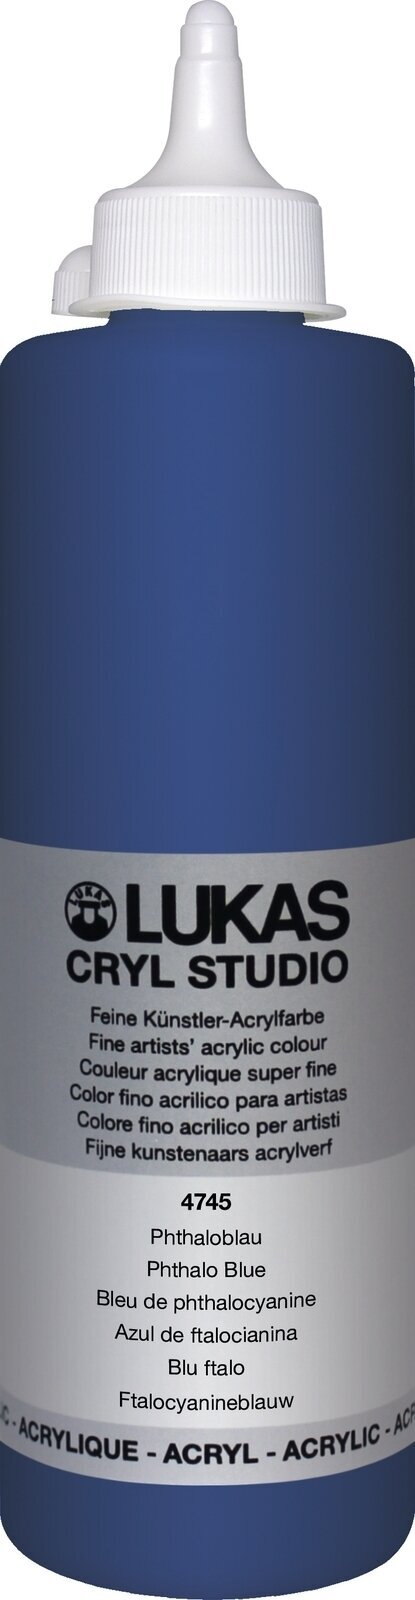 Acrylfarbe Lukas Cryl Studio Acrylic Paint Plastic Bottle Acrylfarbe Phthalo Blue 500 ml 1 Stck